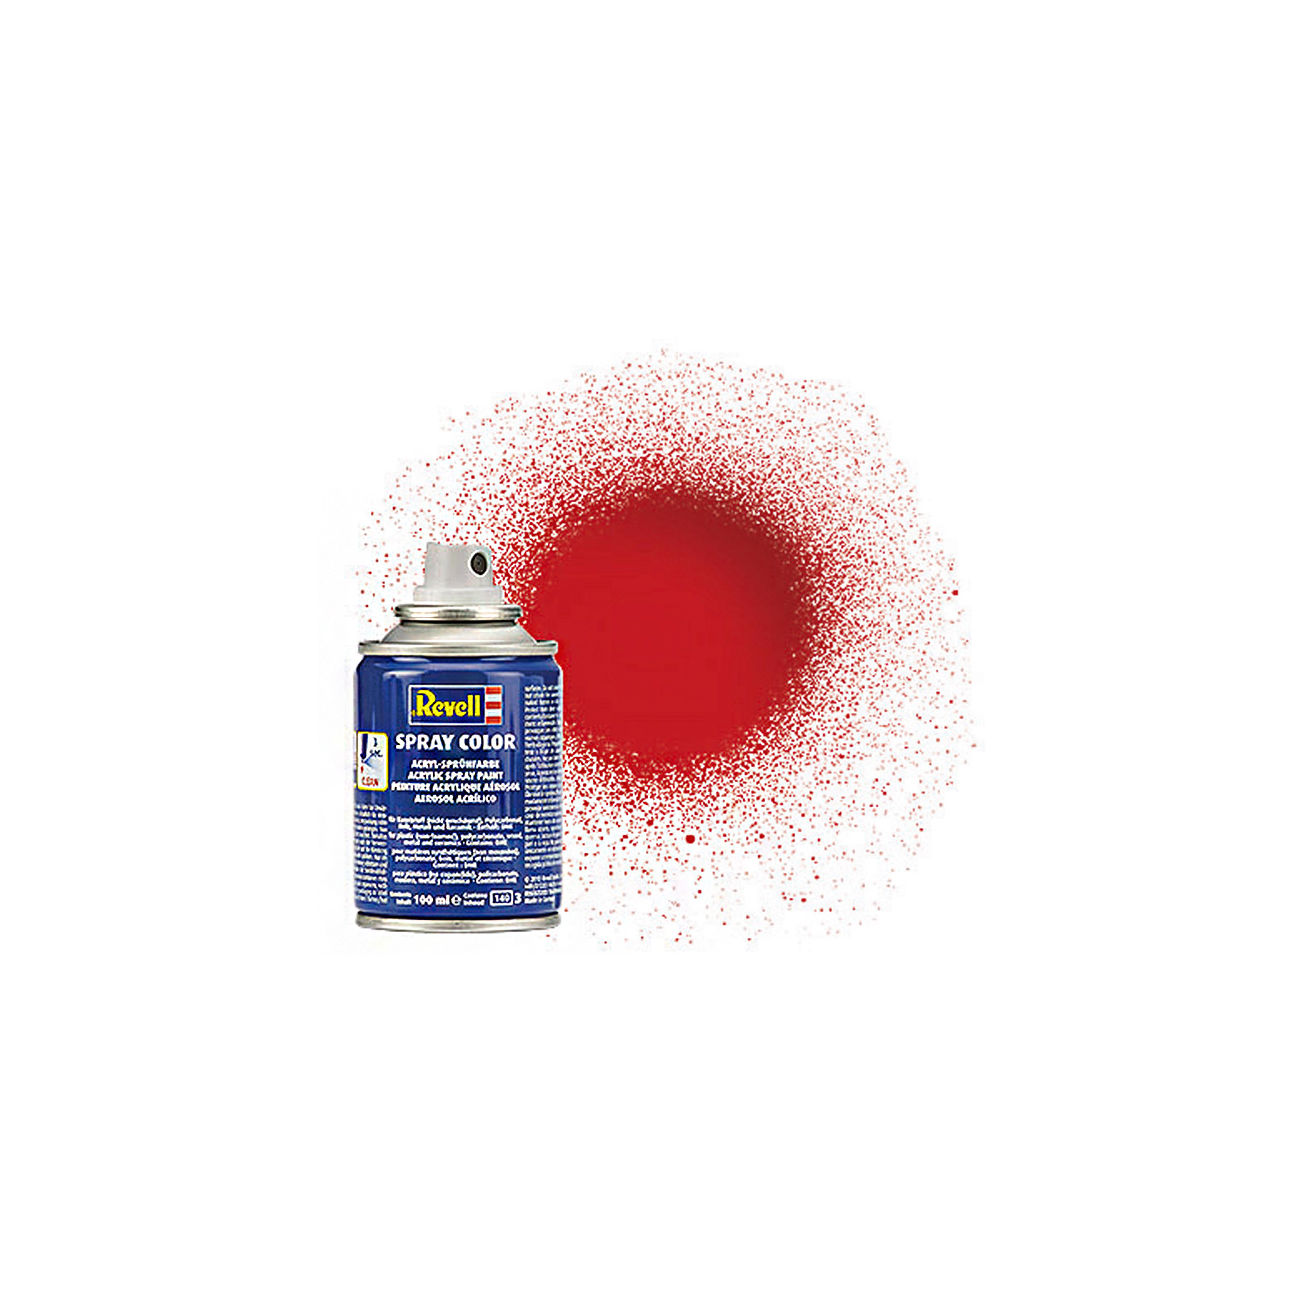 Revell Acryl Spray Color Sprühdose Feuerrot glänzend 100ml 34131